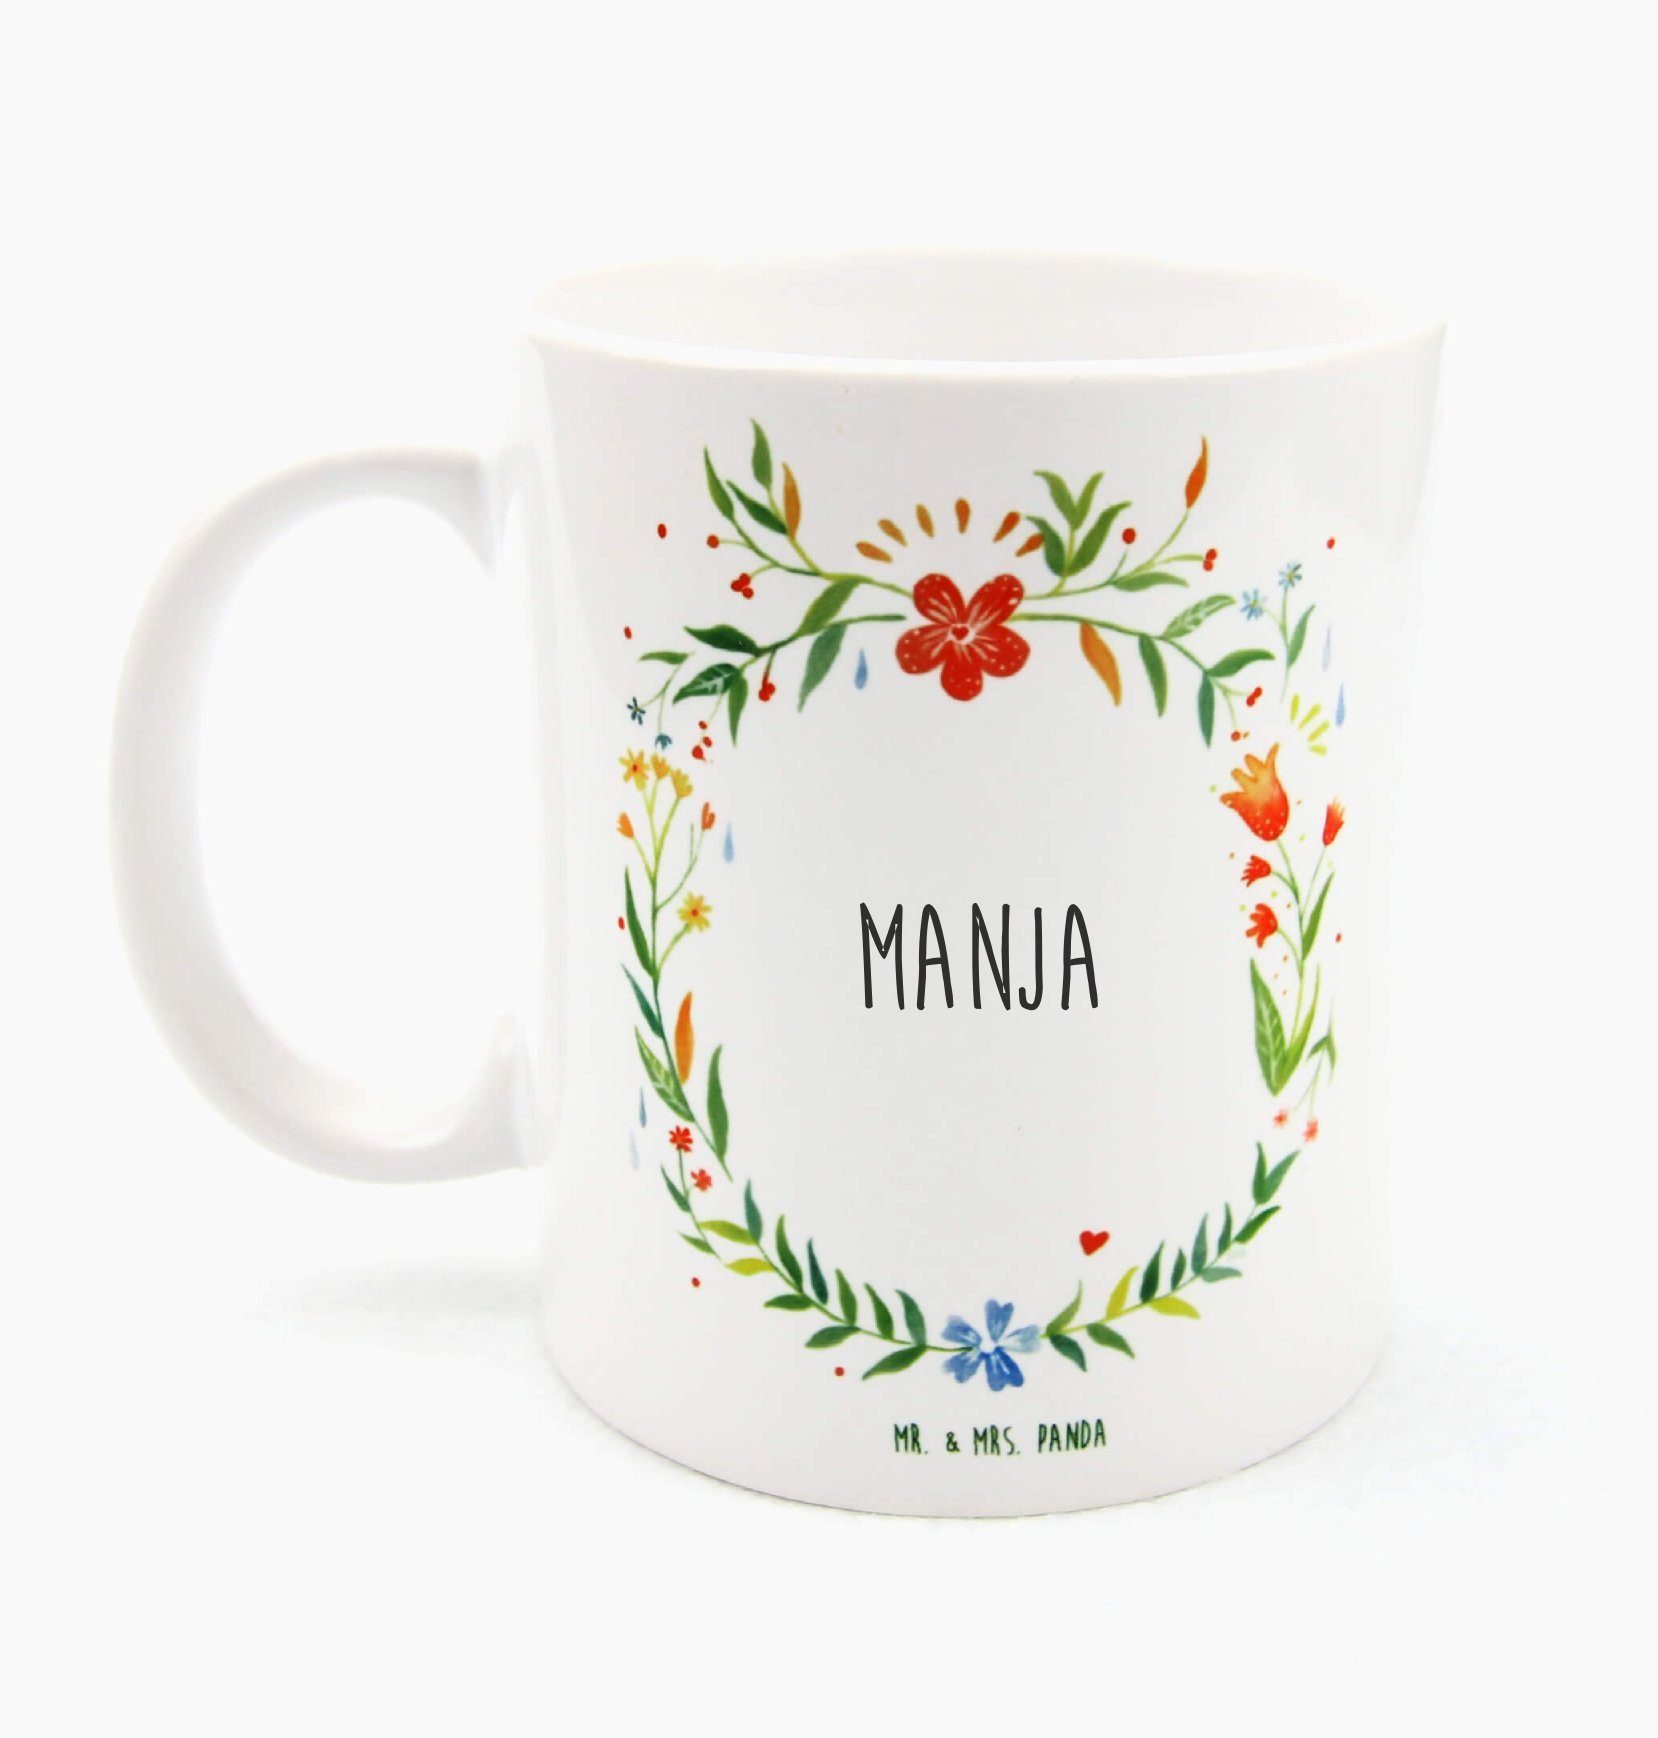 Mr. & Mrs. Panda Tasse Manja - Geschenk, Porzellantasse, Kaffeetasse, Kaffeebecher, Teetasse, Keramik